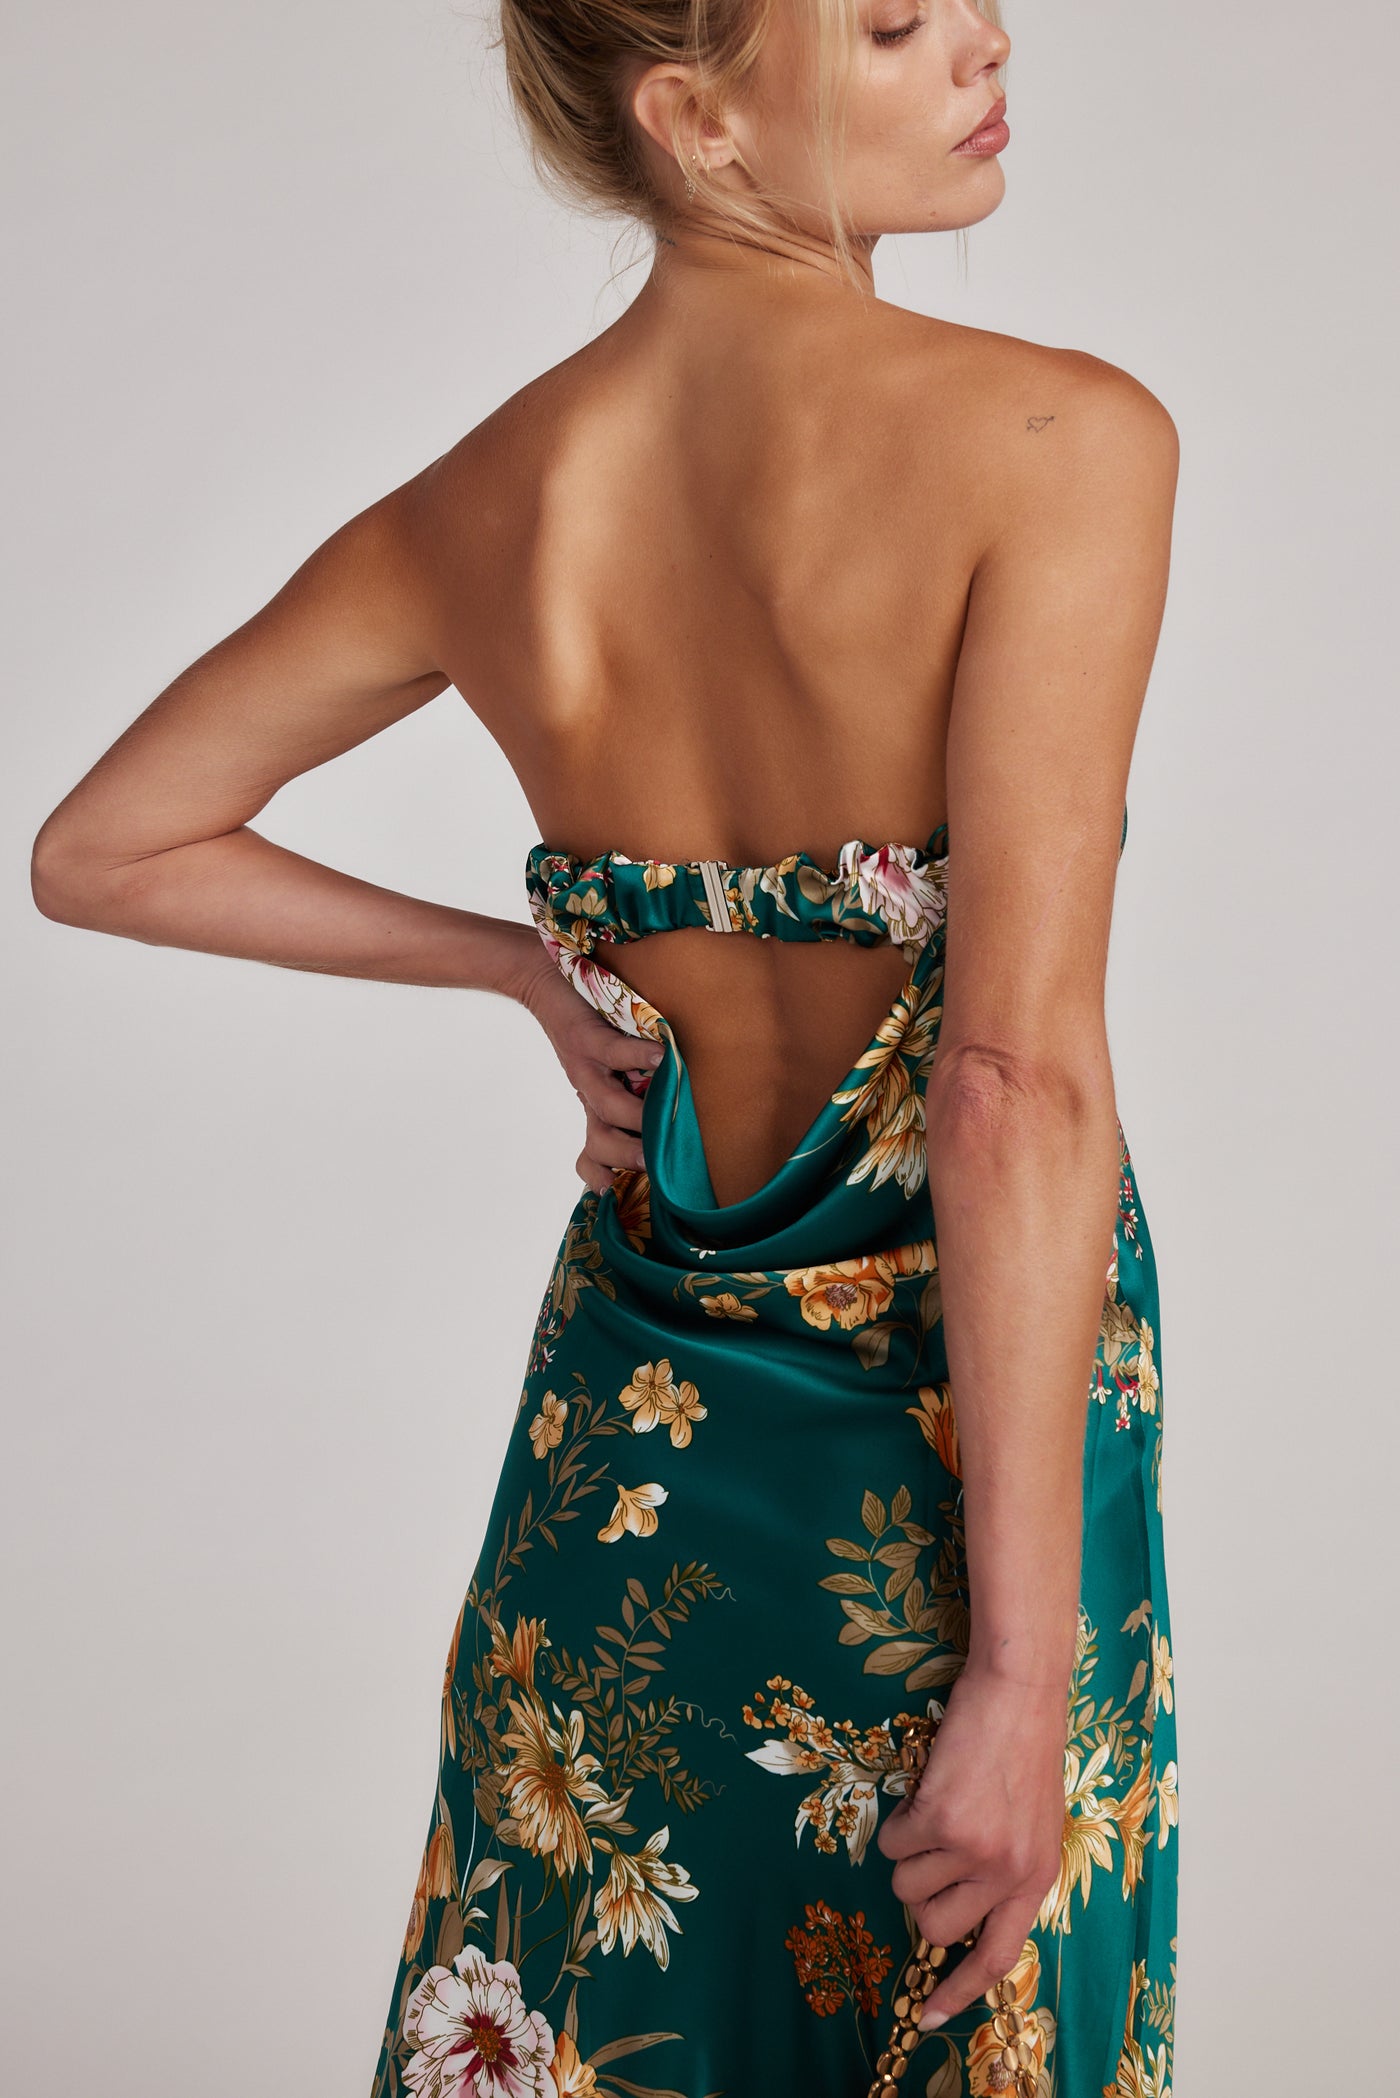 Natalia Emerald Floral Strapless Maxi Dress